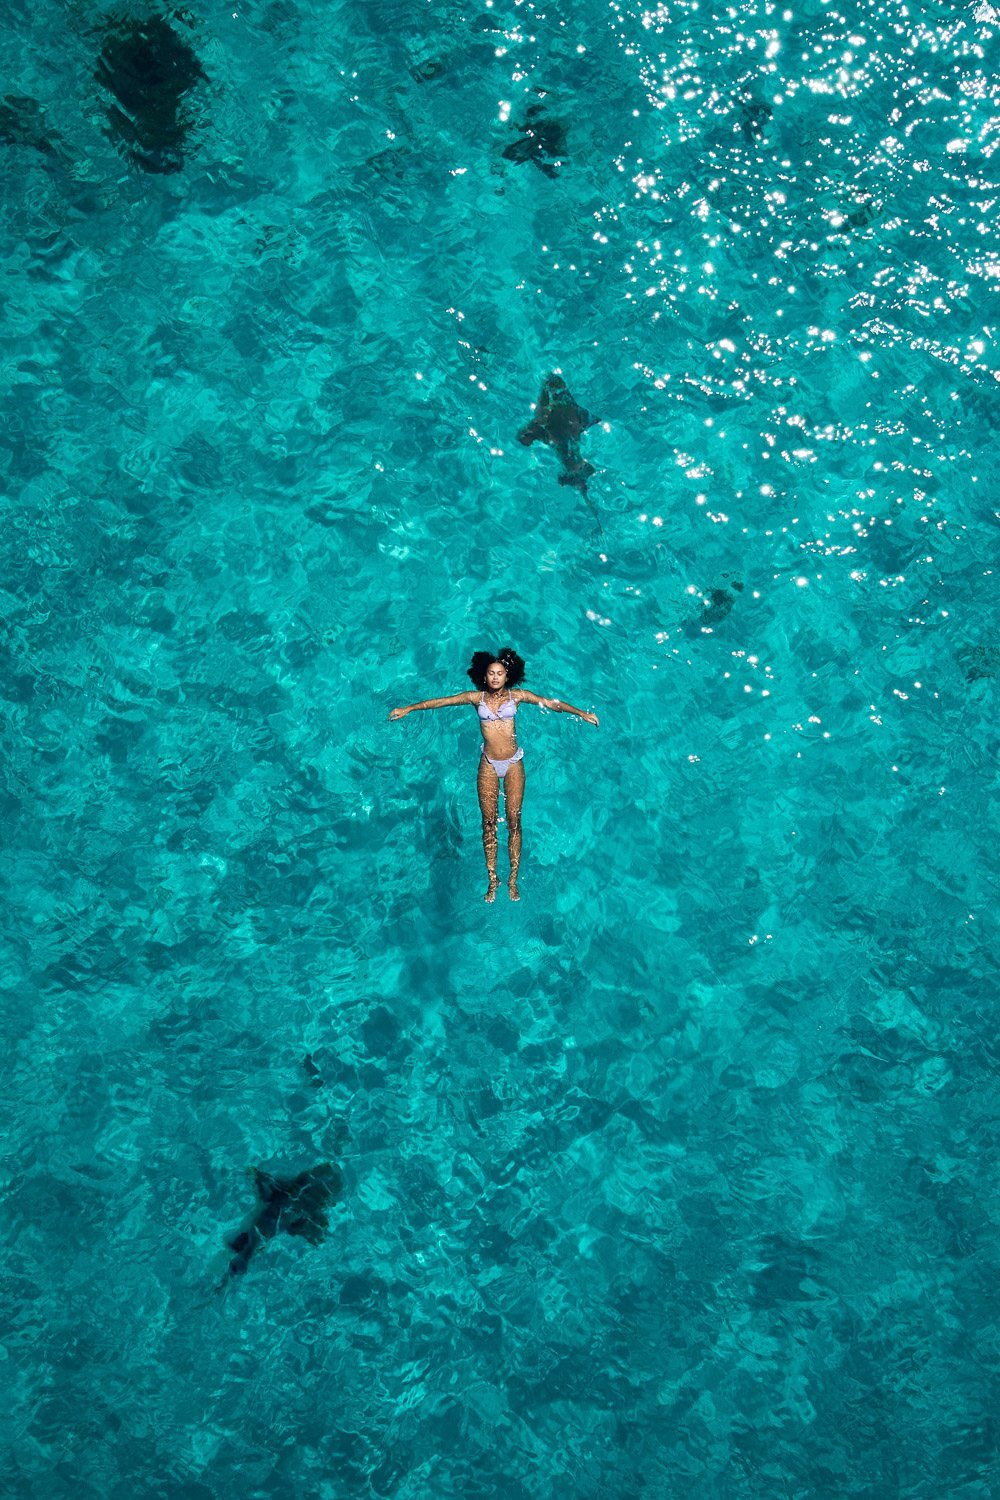 Terra Chula Resort Roatán Honduras - Swimming with sharks